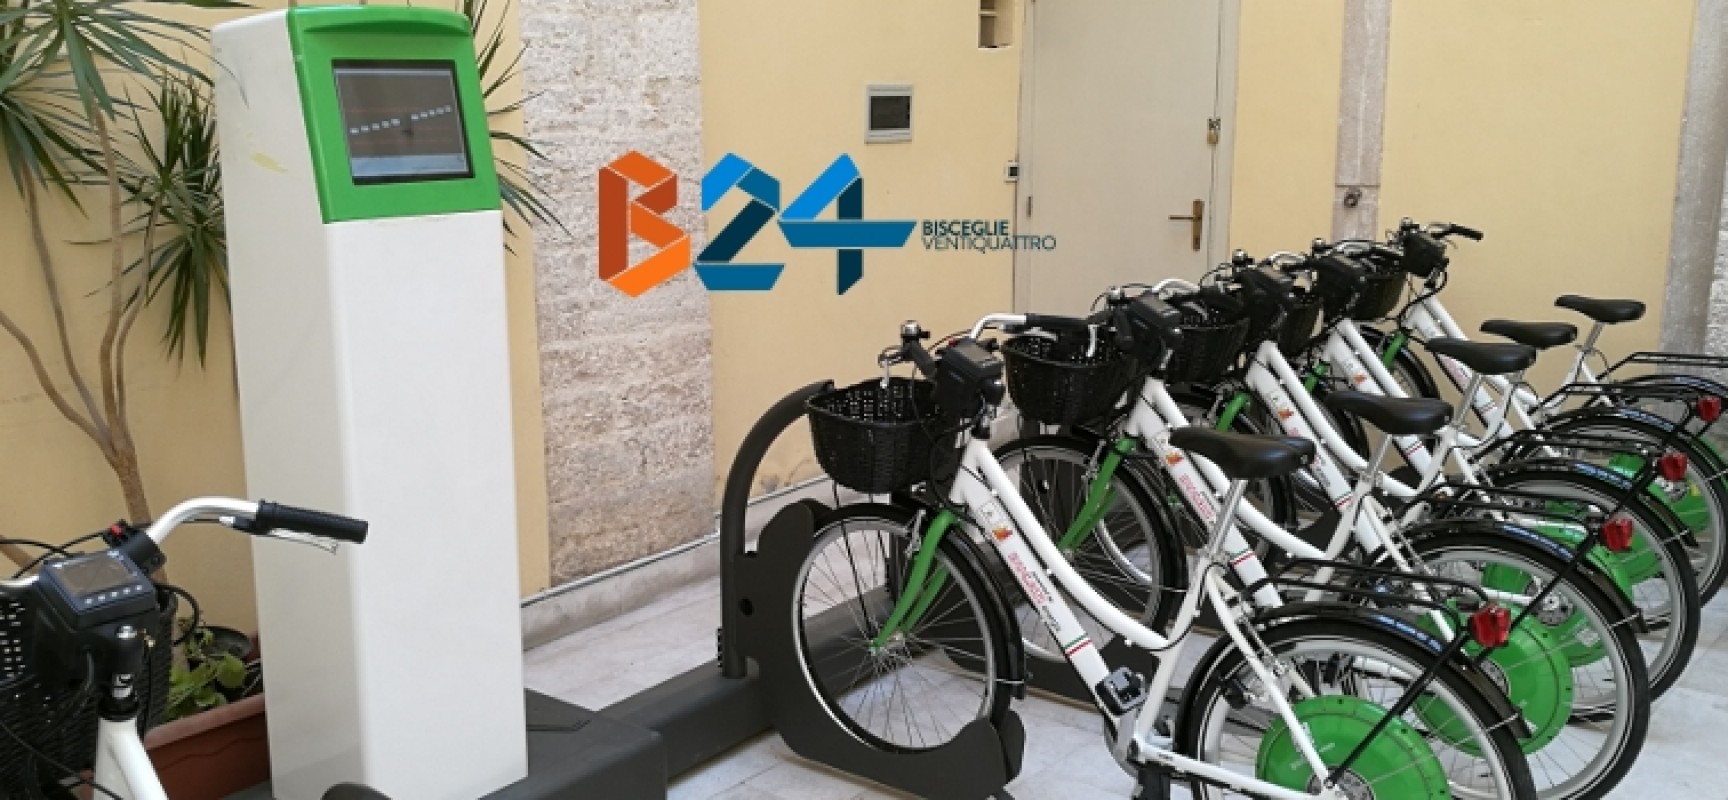 Consegnate in comune dieci e-bike 0, le biciclette a pedalata assistita di ultima generazione /FOTO